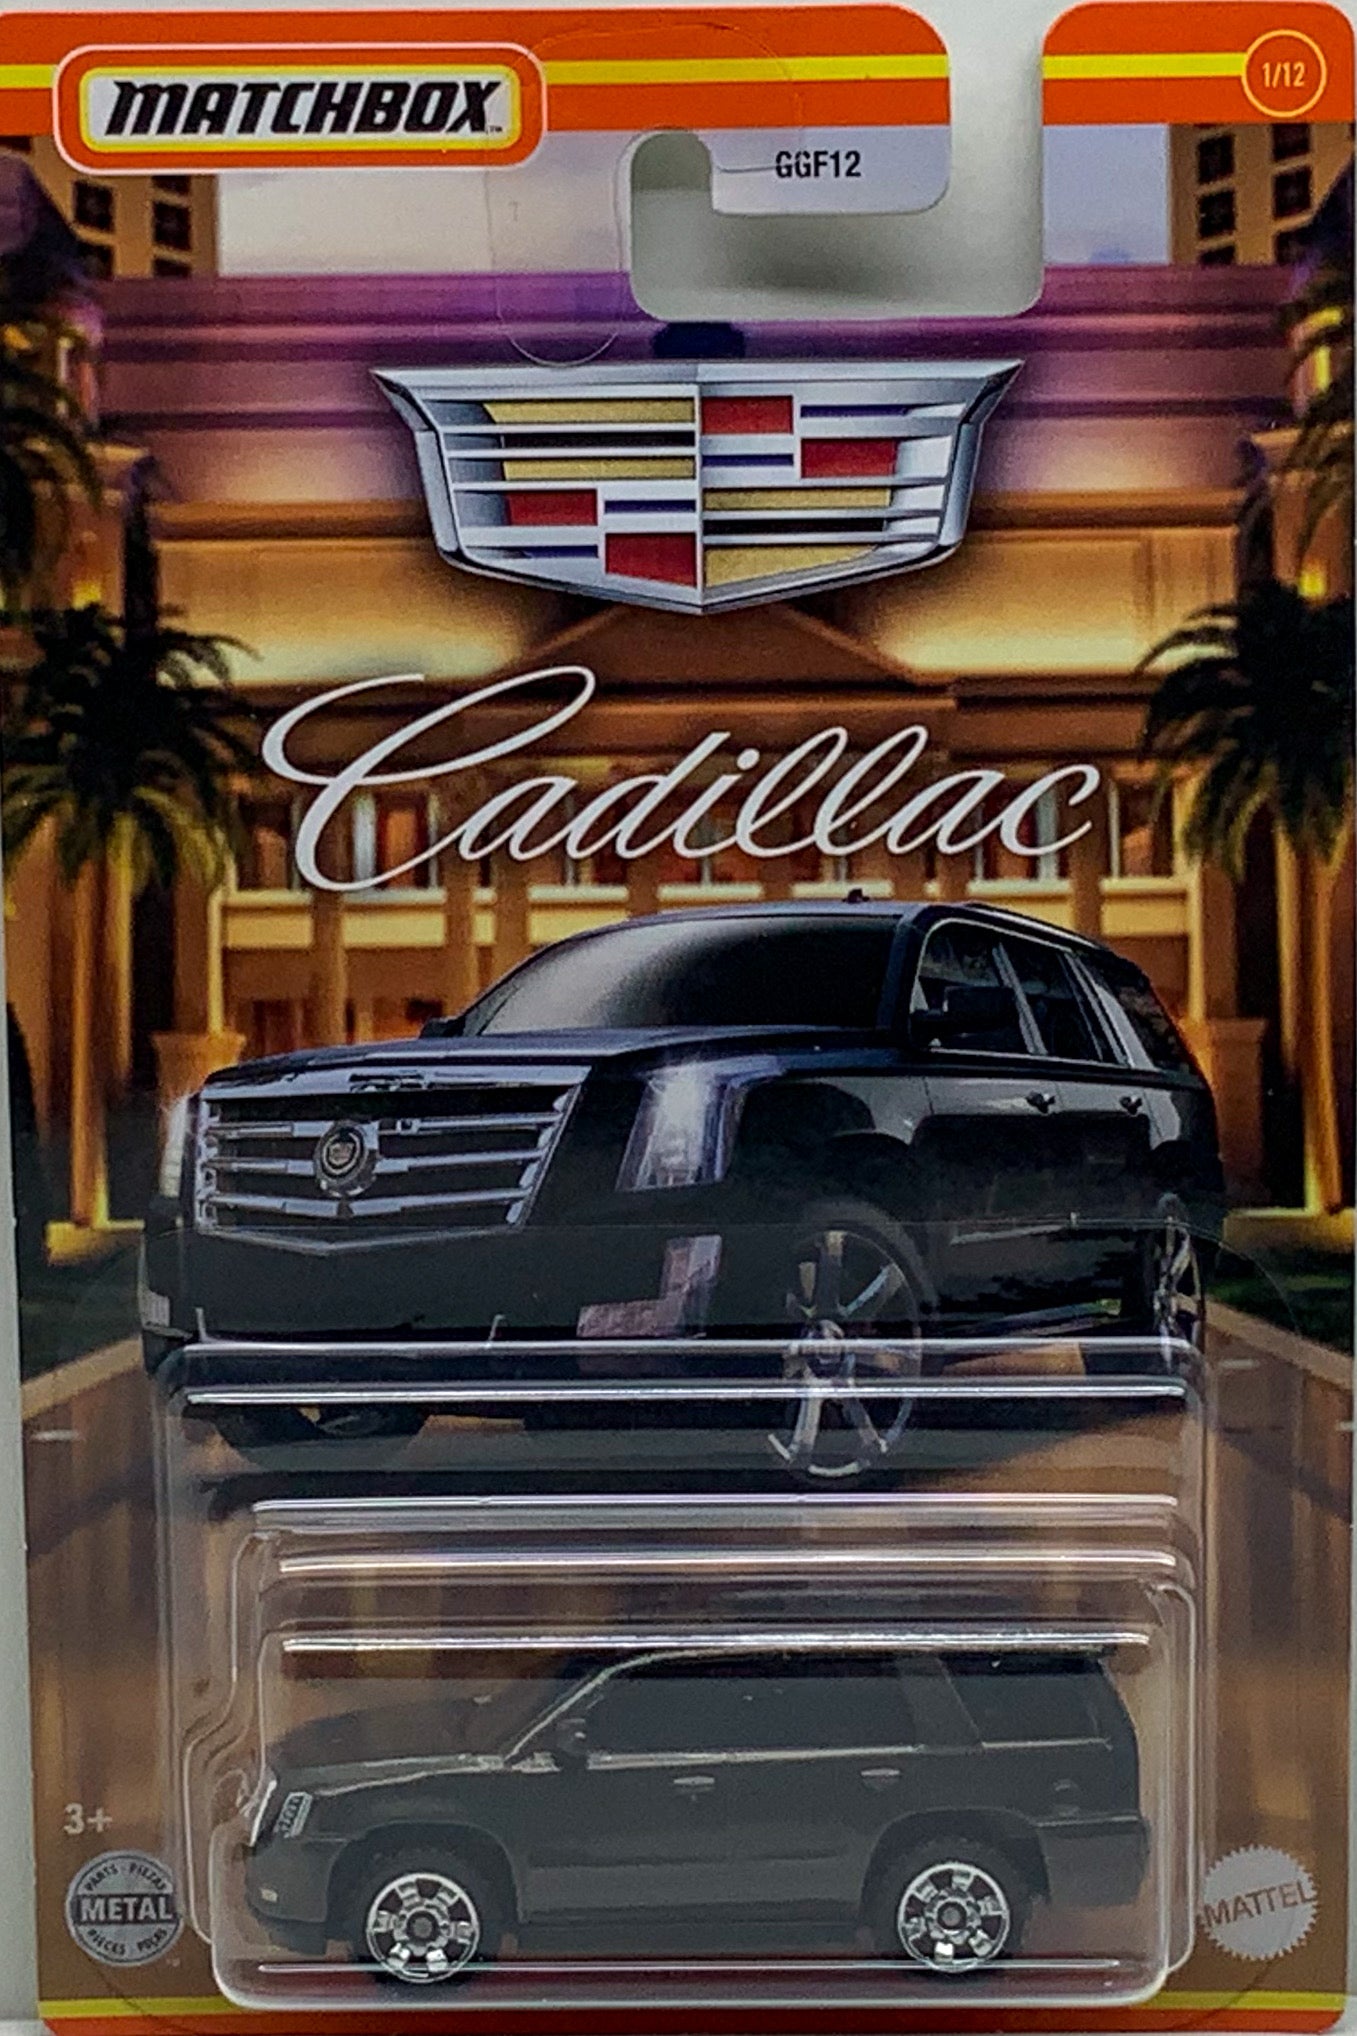 Buy at Tatoy Matchbox Cadillac Series 2015 Cadillac Escalade Number 1 from set of 12 Mattel GGF12